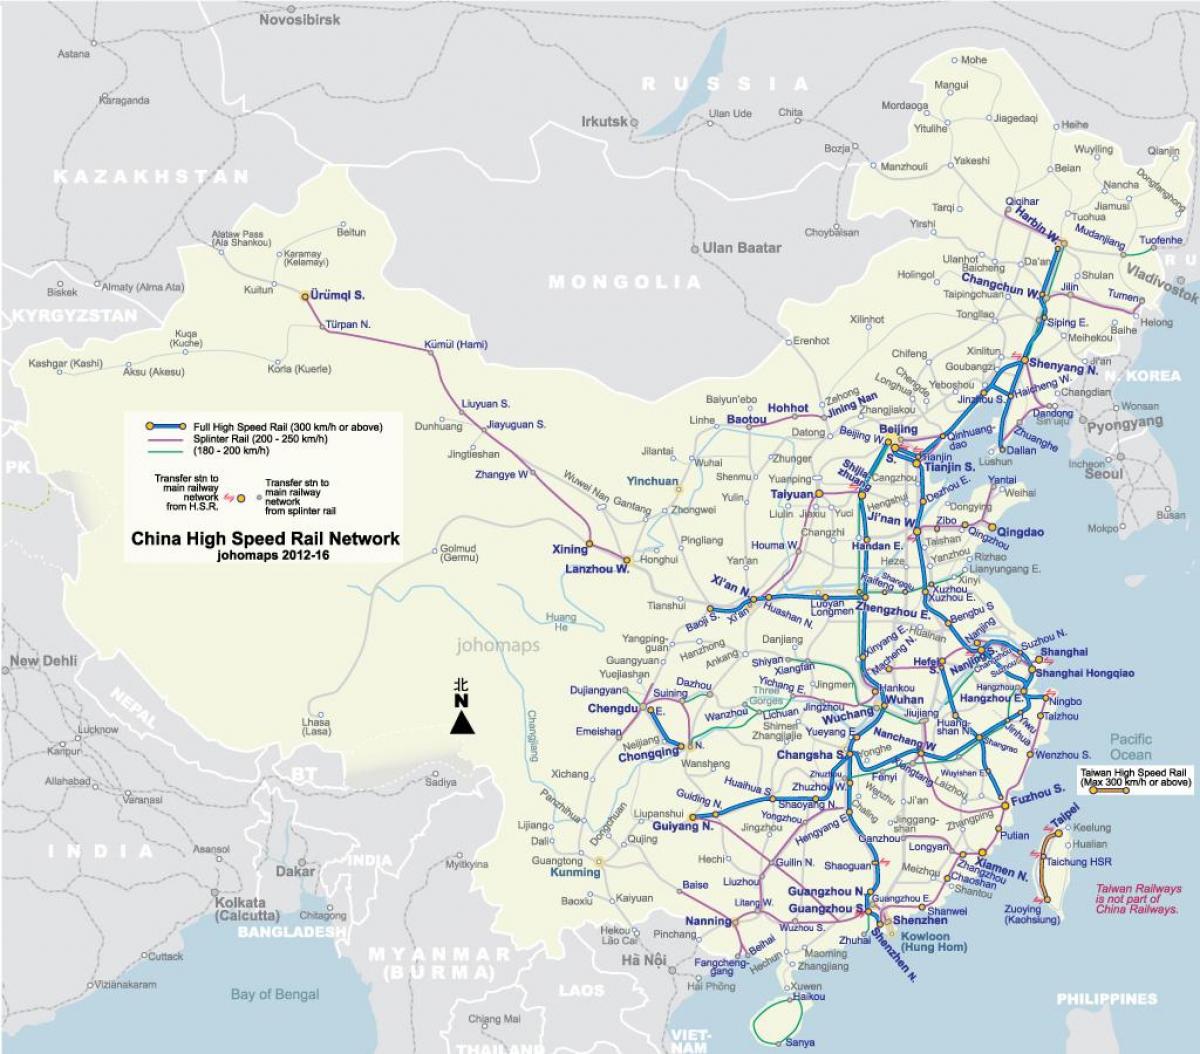 високо брзински железнички Кина мапа